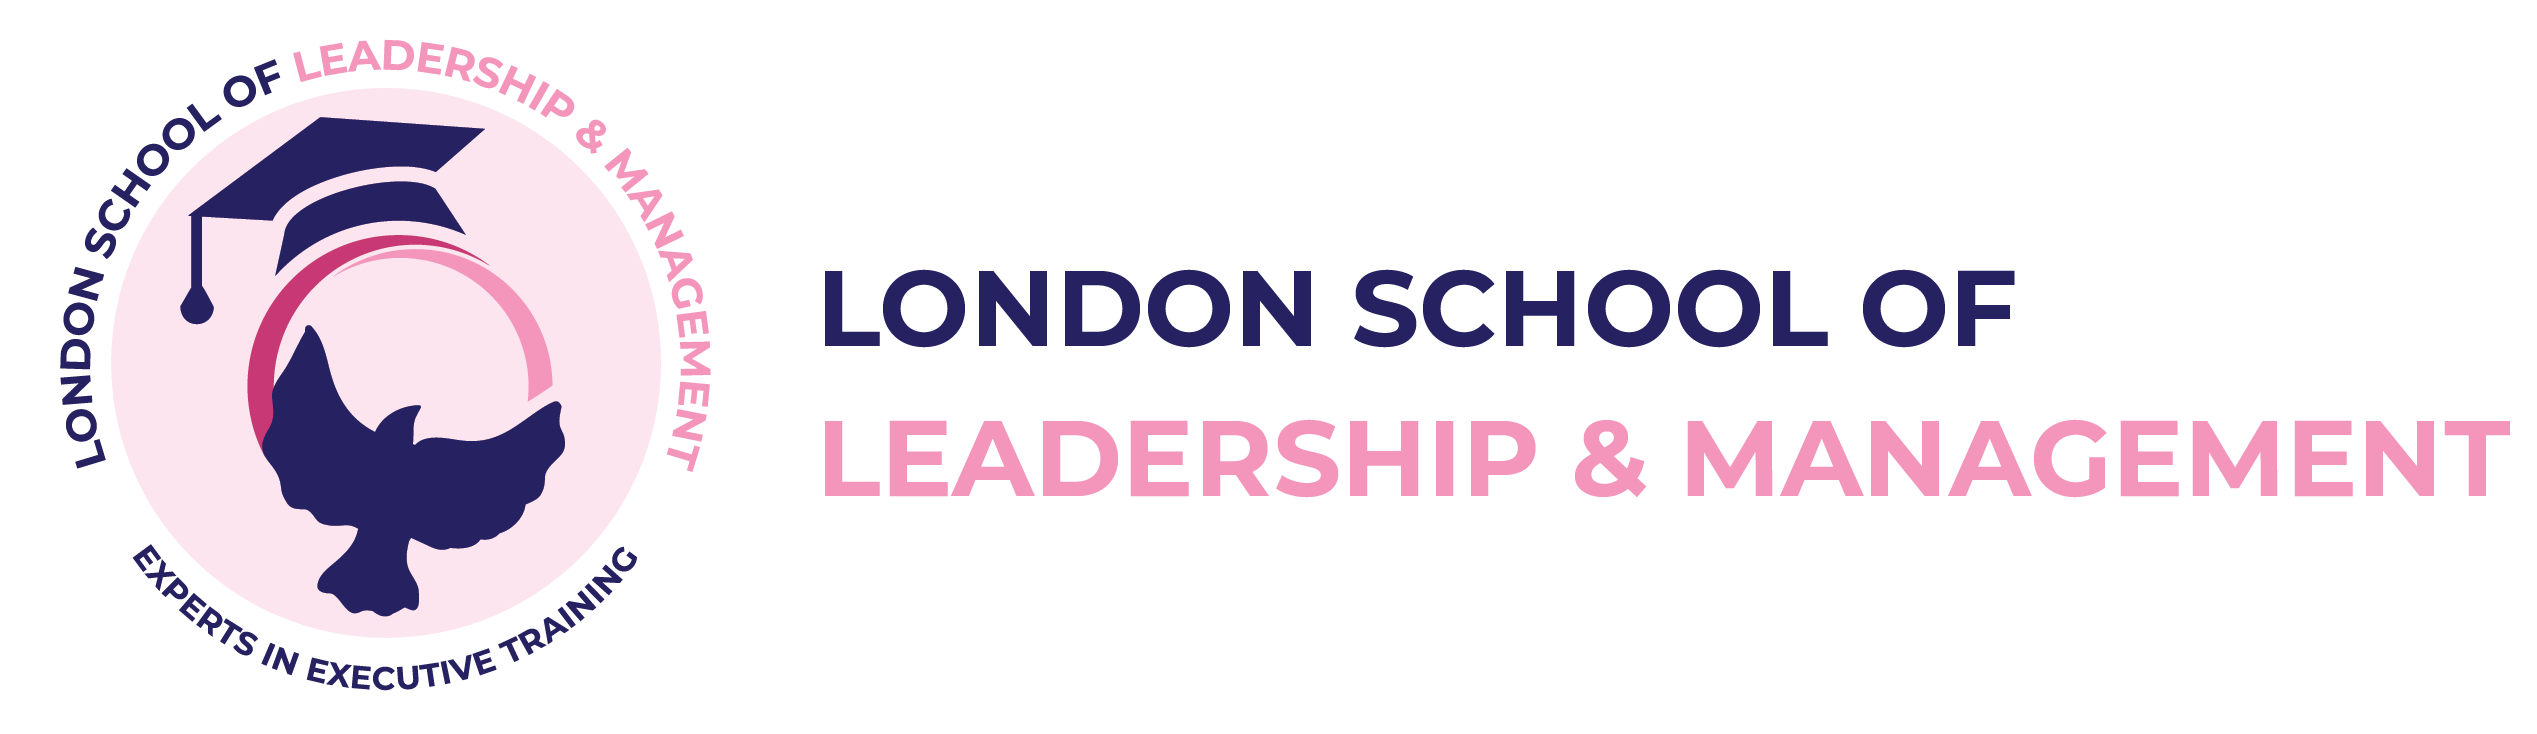 London School Of Leadership And Management logo